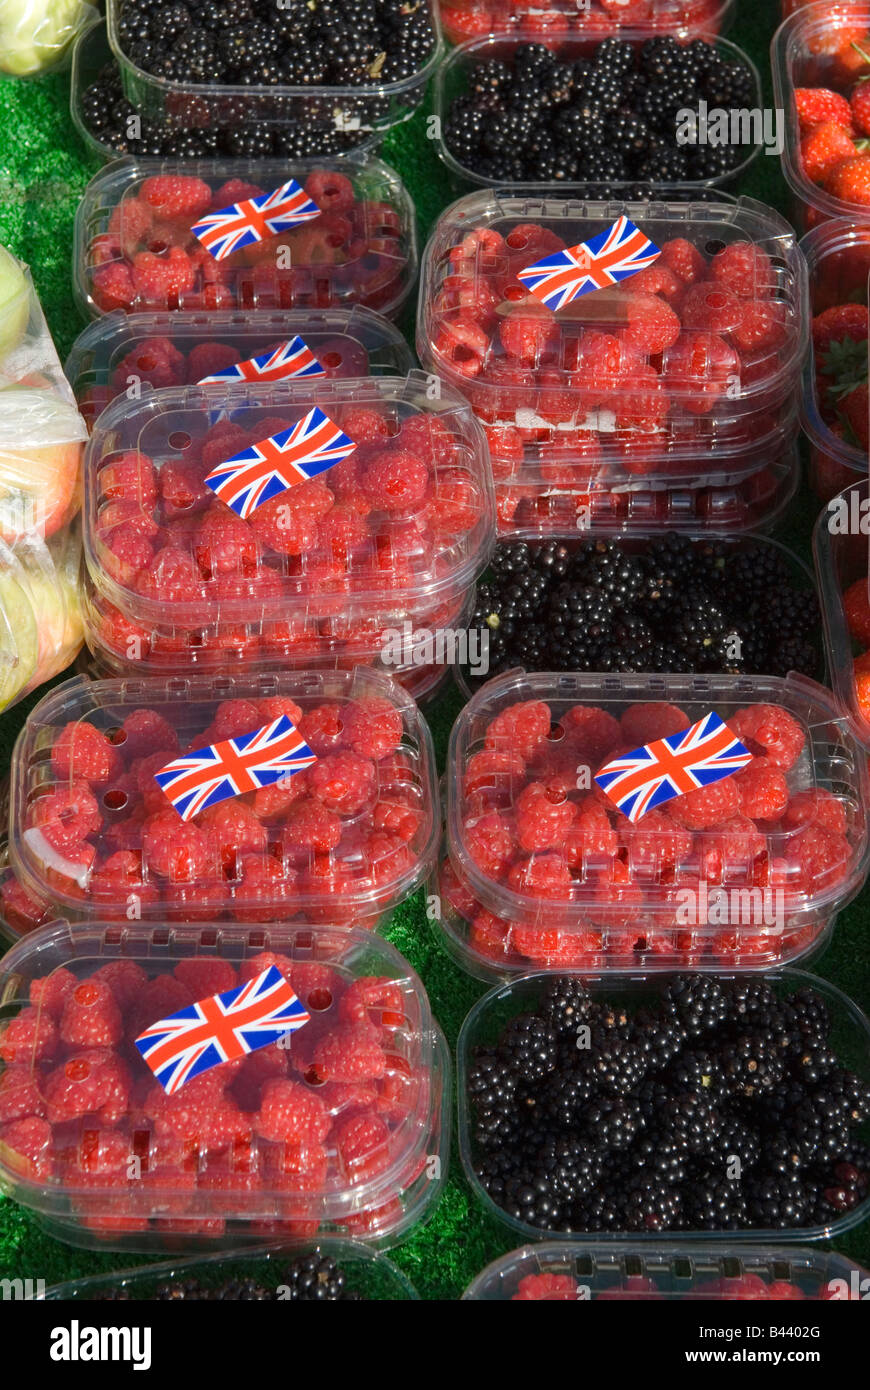 British Raspberries with Union Jack sticker displayed on market stall Blackheath Farmers Market South East London UK 2008 Stock Photo